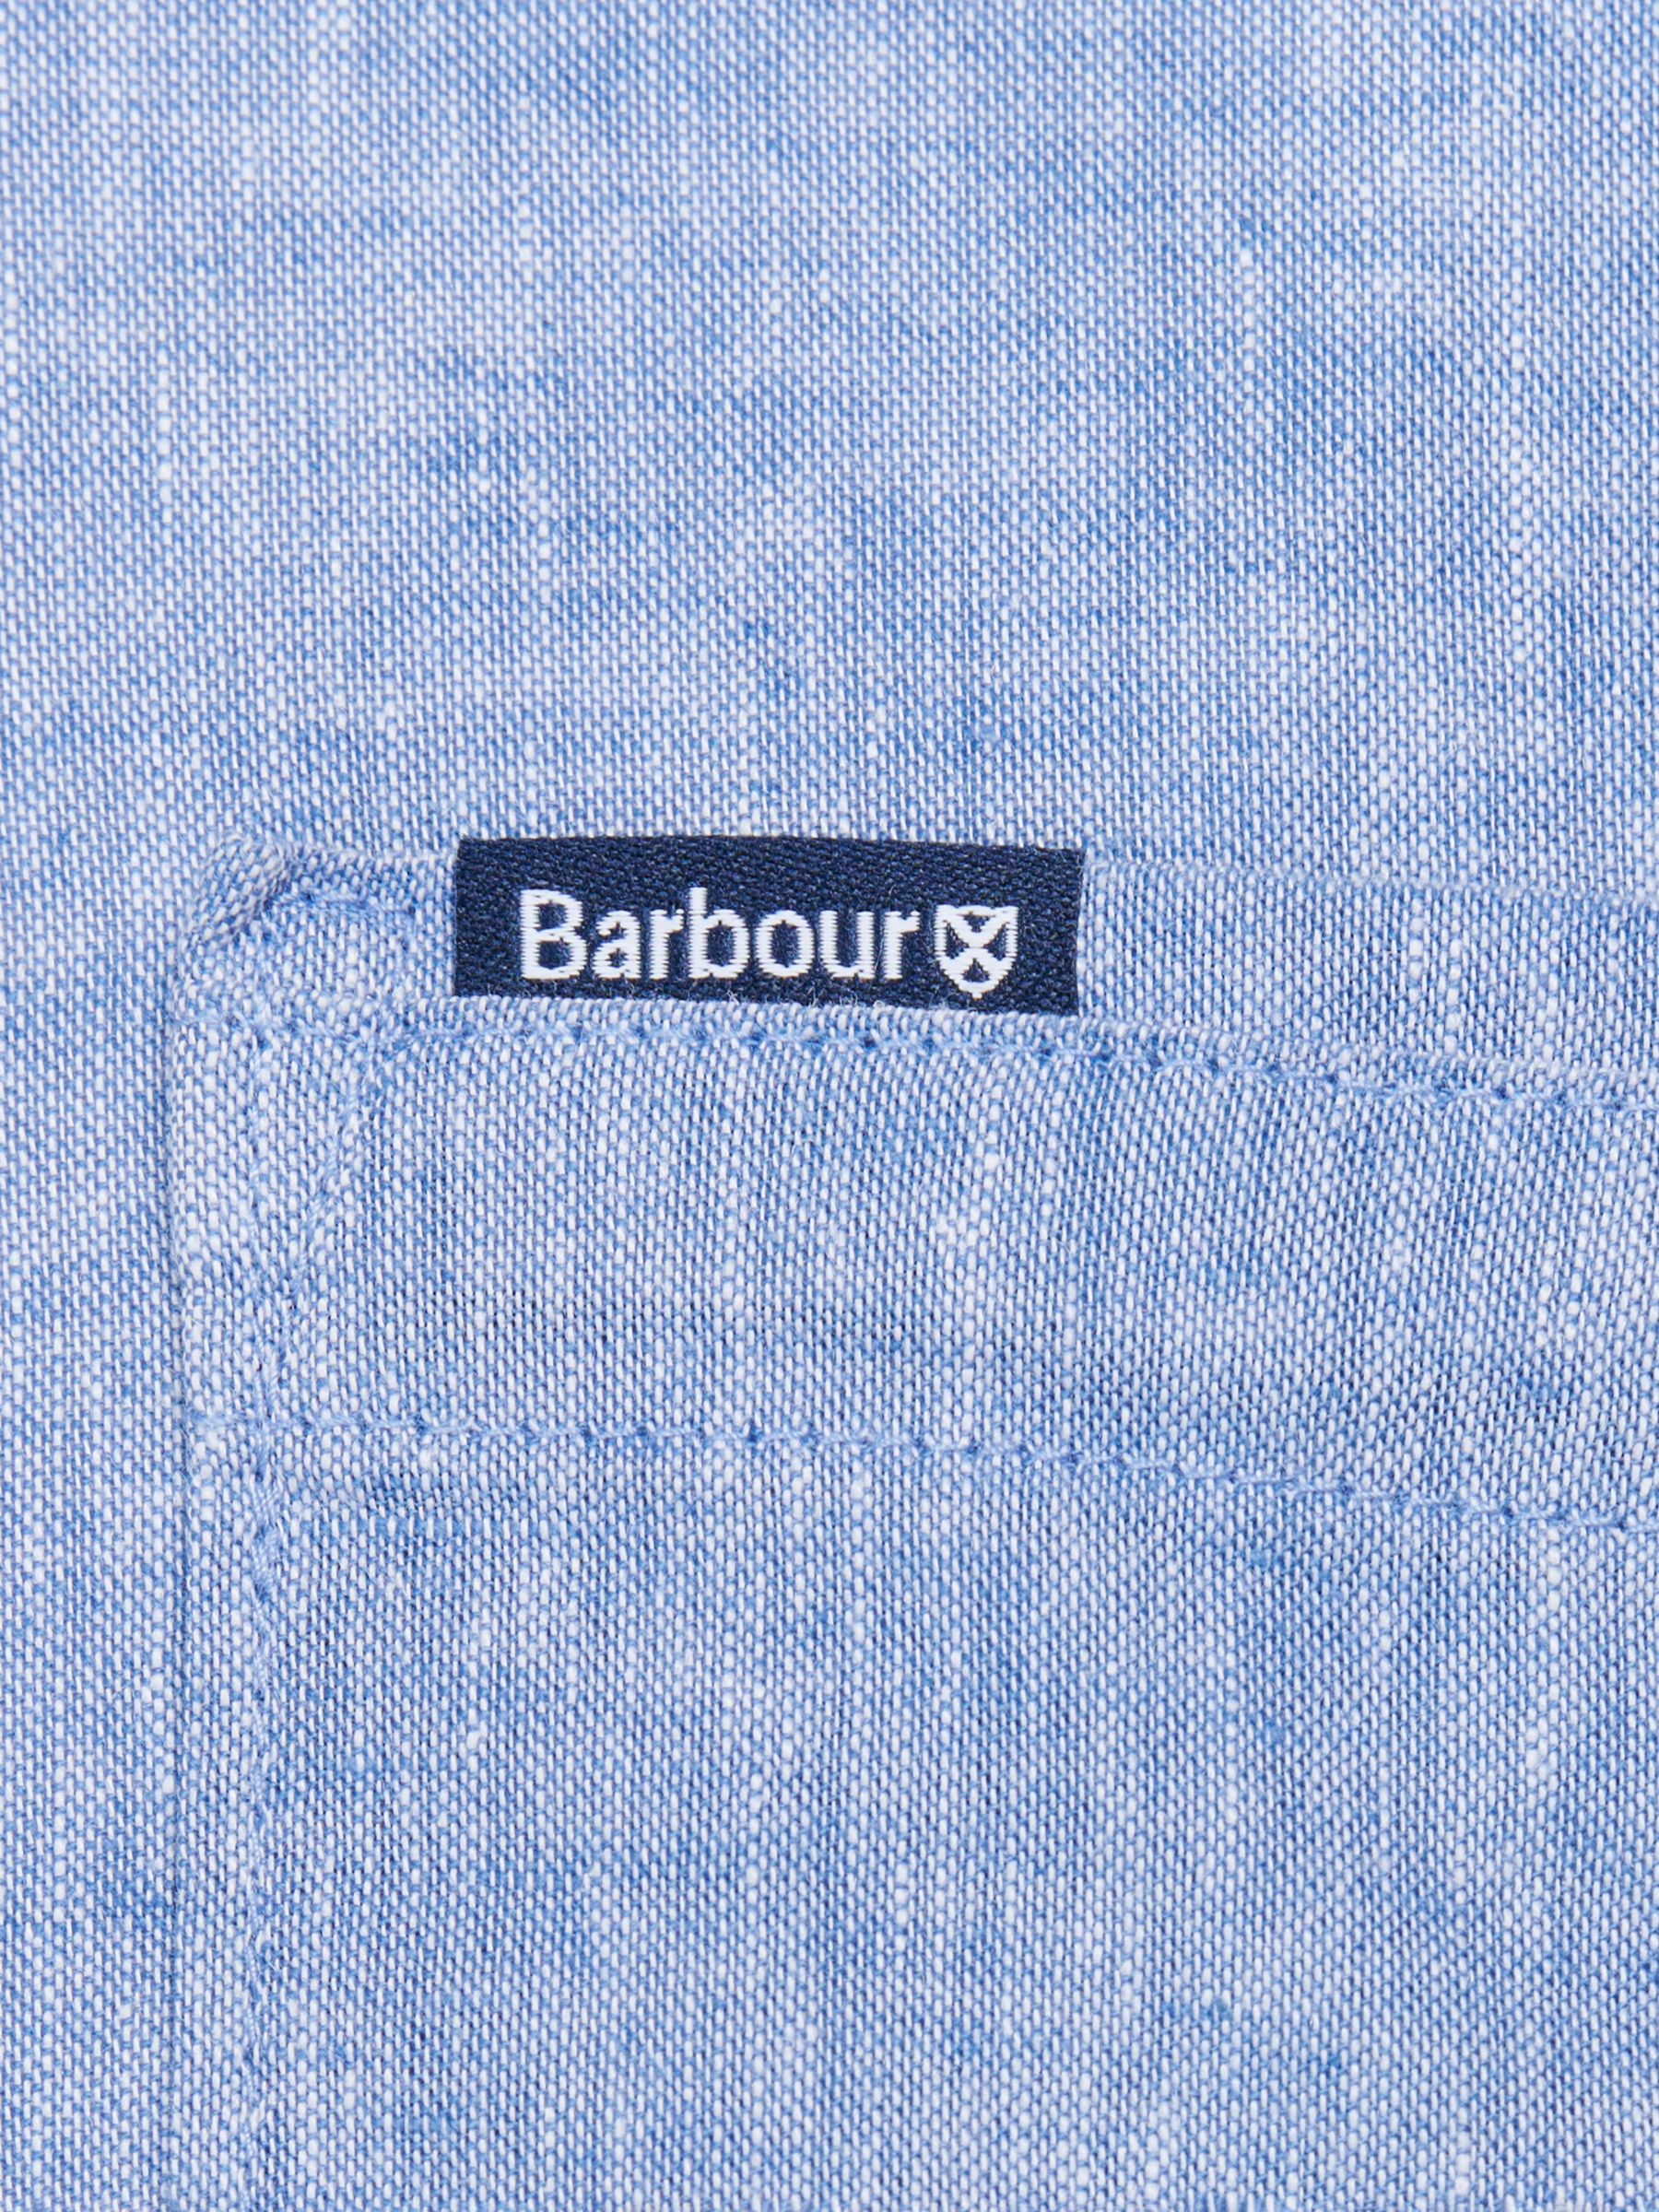 Barbour Nelson Tailored Fit Linen Cotton Blend Shirt, Blue, S